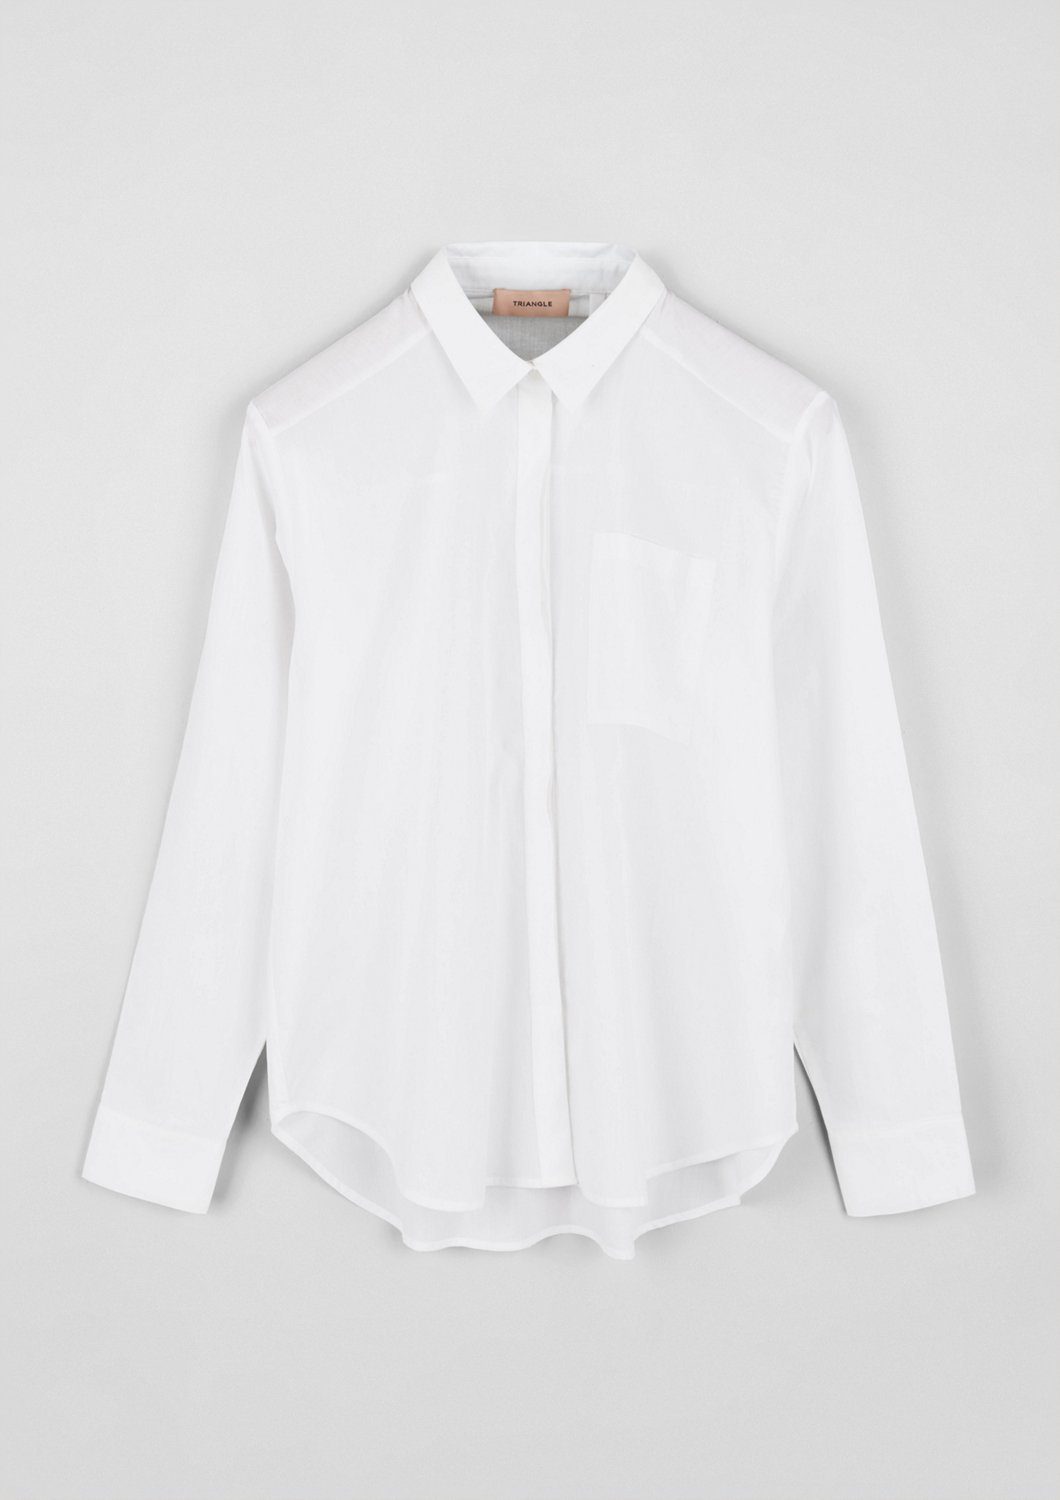 Triangle NU 15% KORTING: TRIANGLE Eenvoudige blouse van chambray